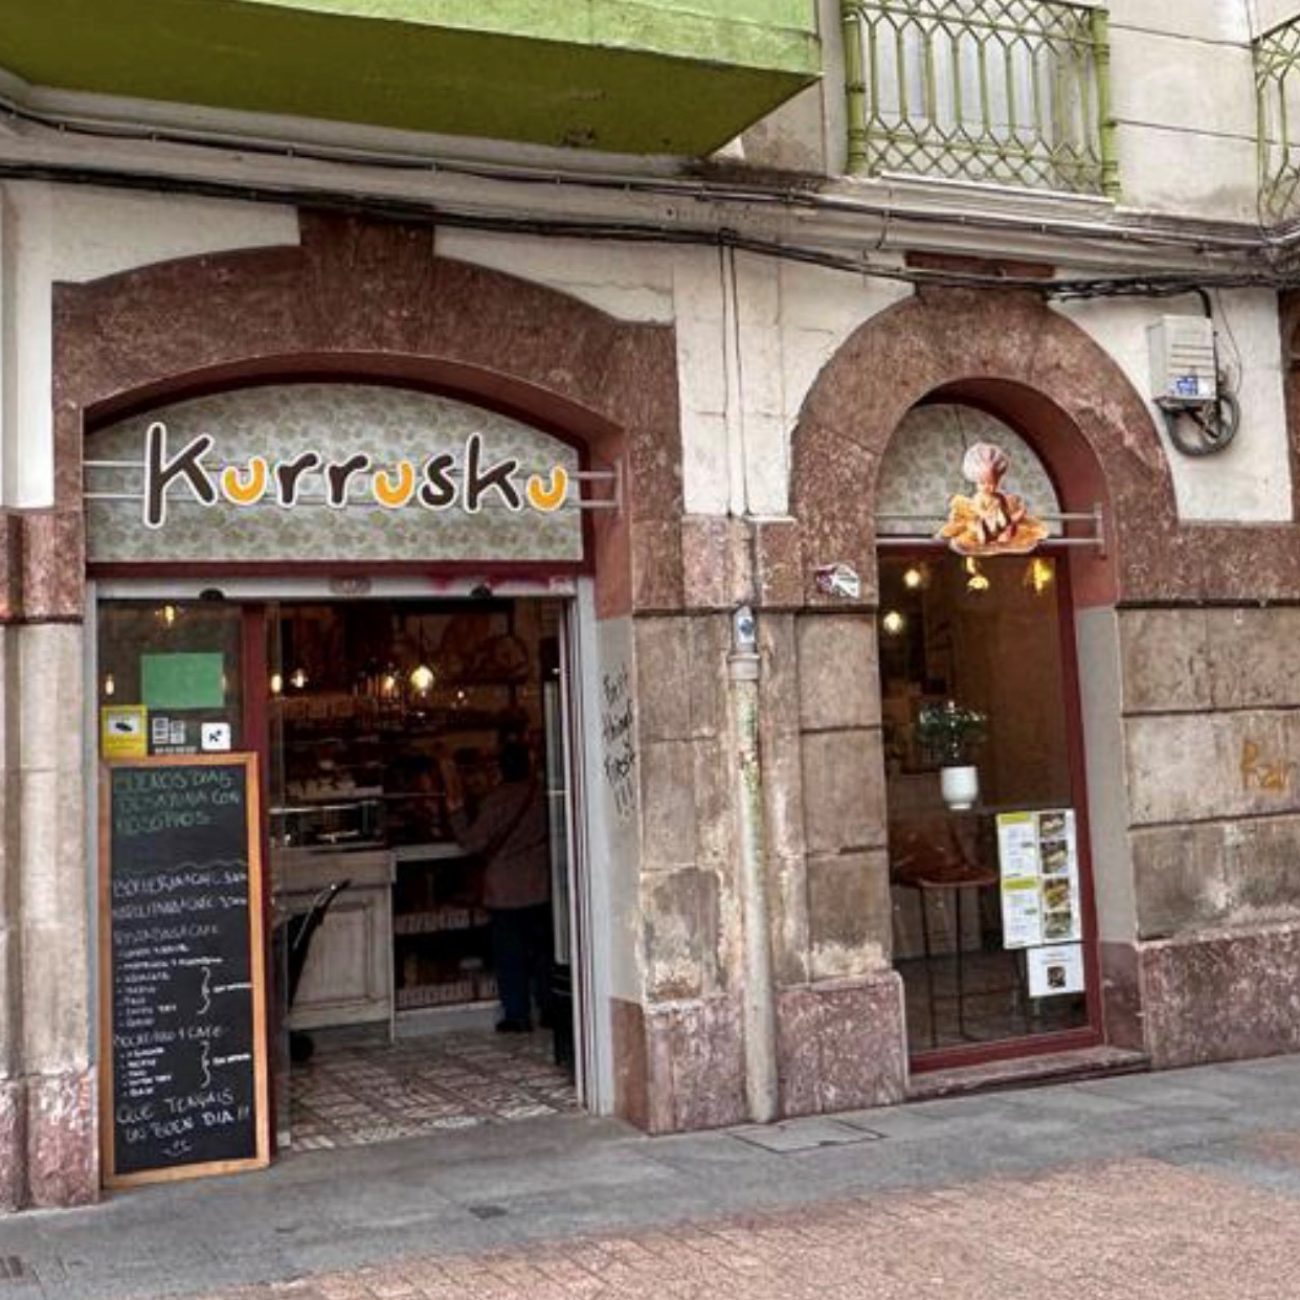 Kurrusku Kai Alde en el Casco viejo de Bilbao